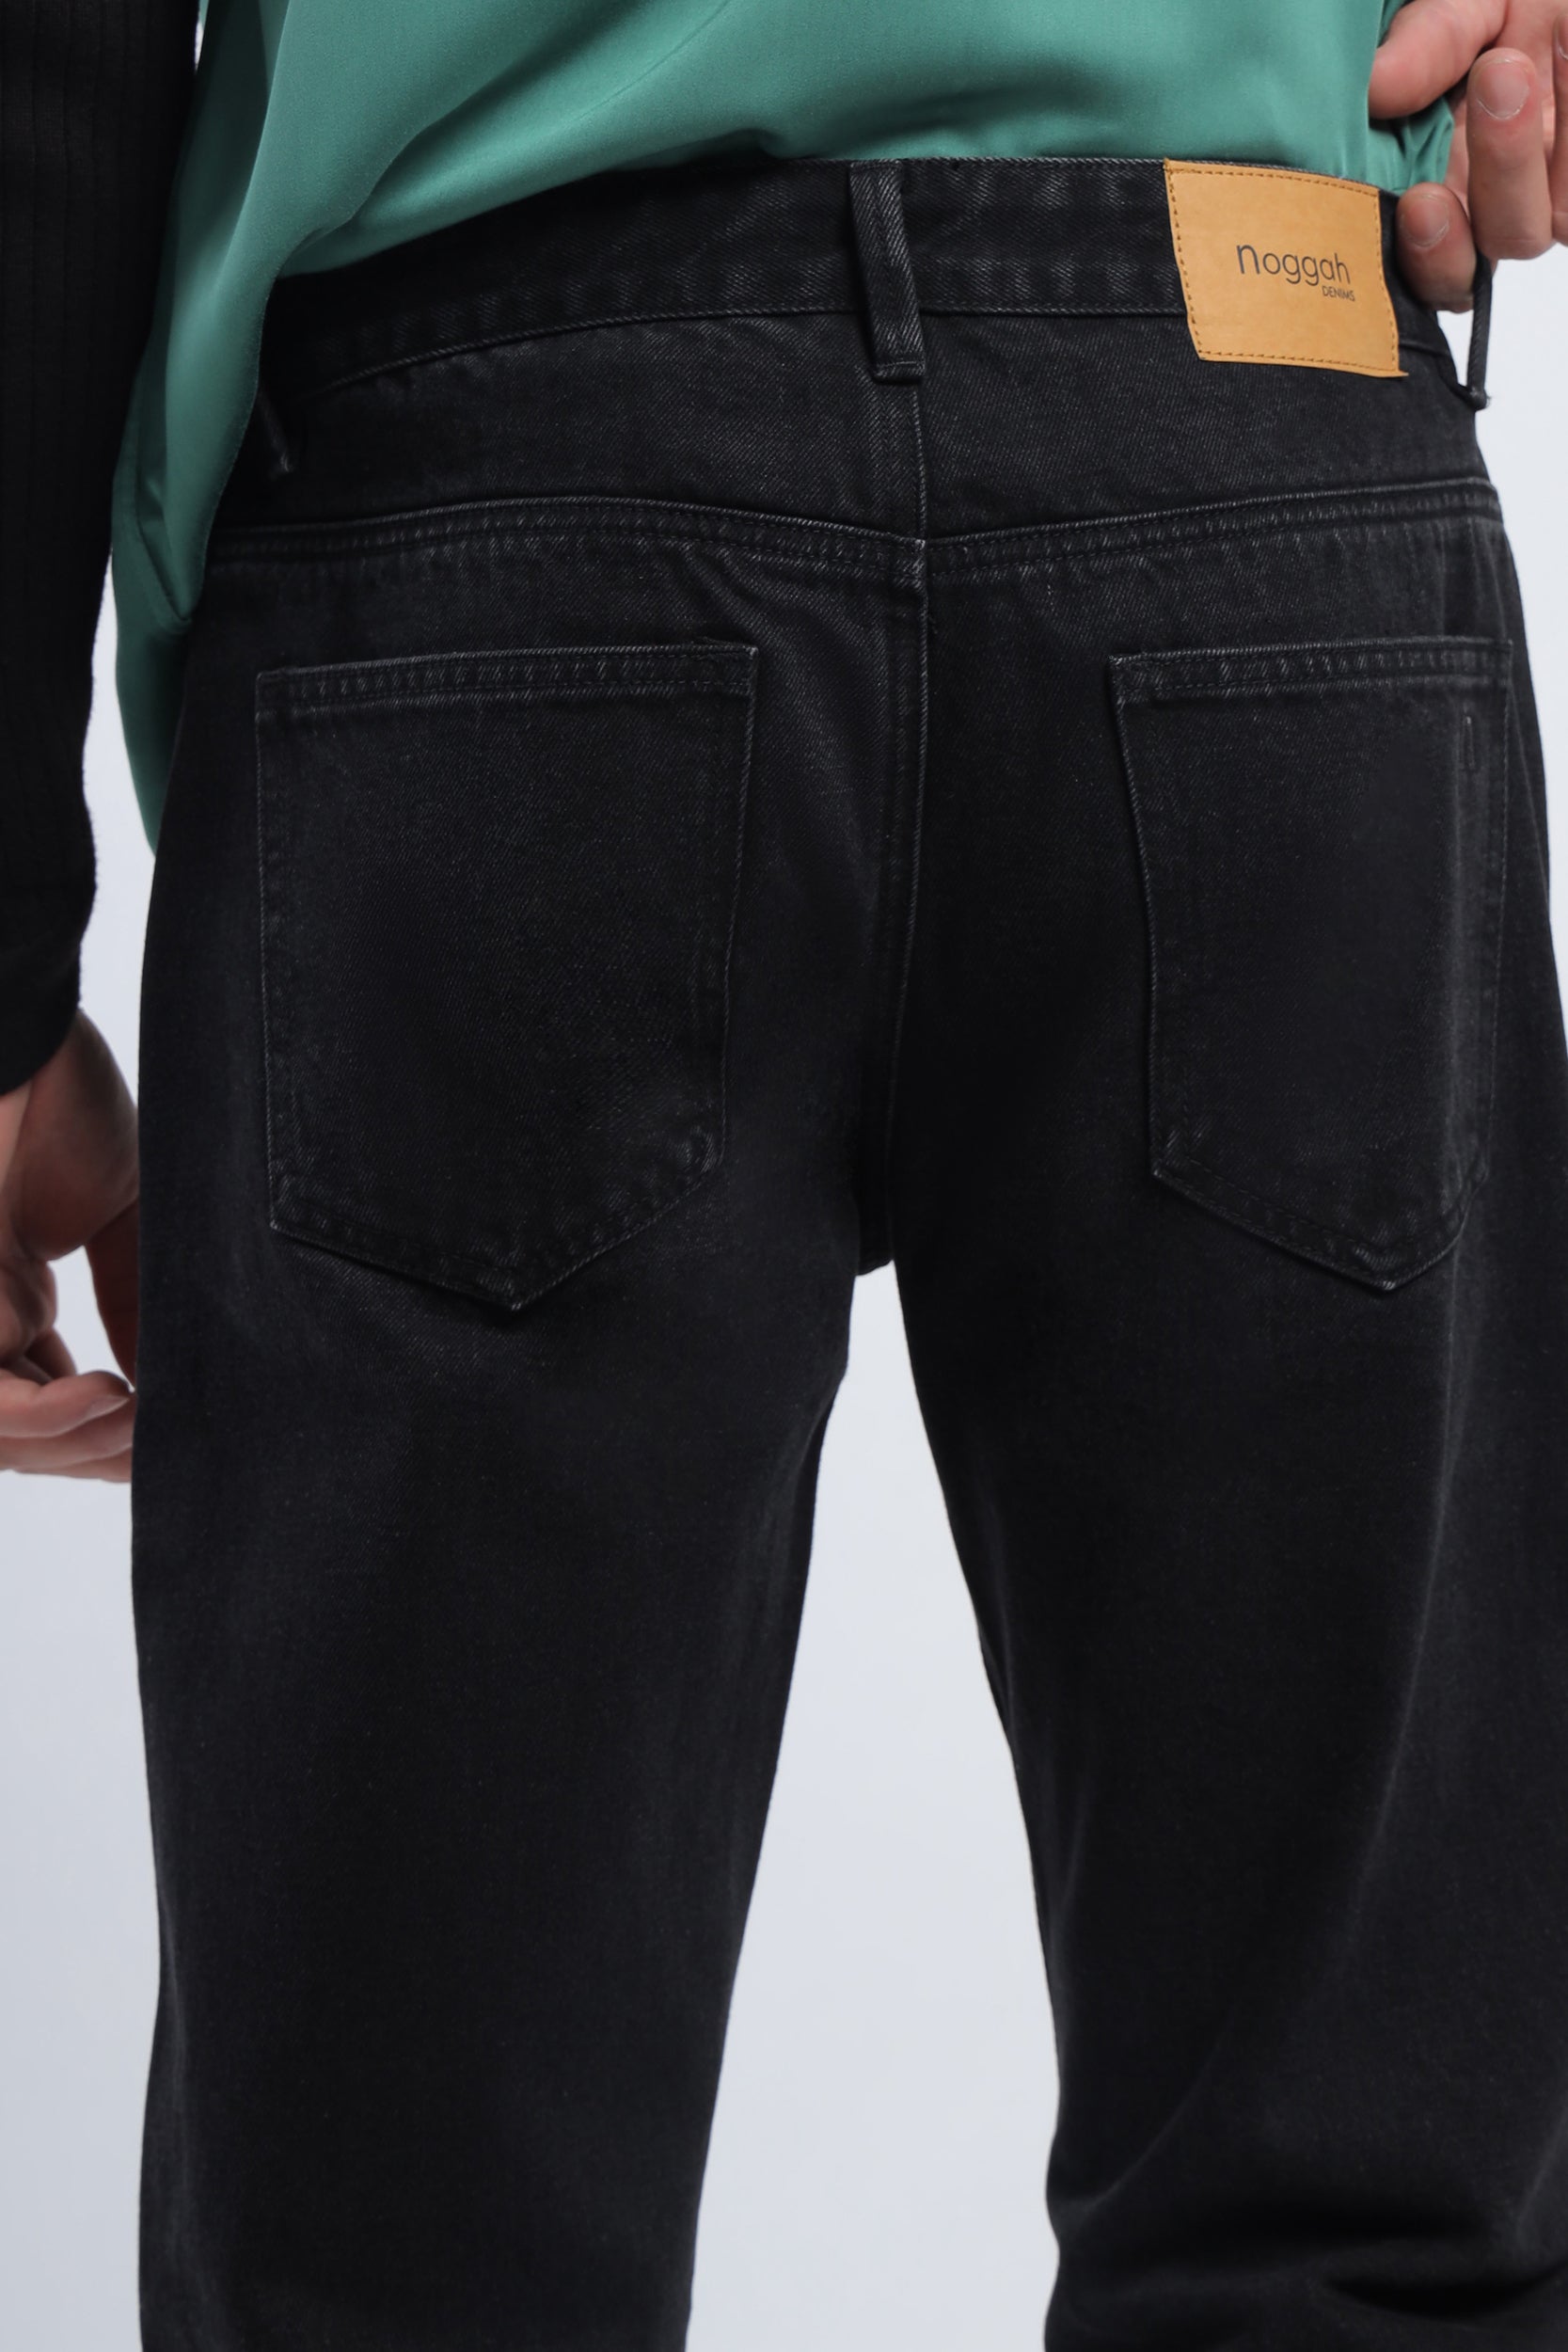 backbanchers Slim Men Black Jeans - Buy backbanchers Slim Men Black Jeans  Online at Best Prices in India | Flipkart.com